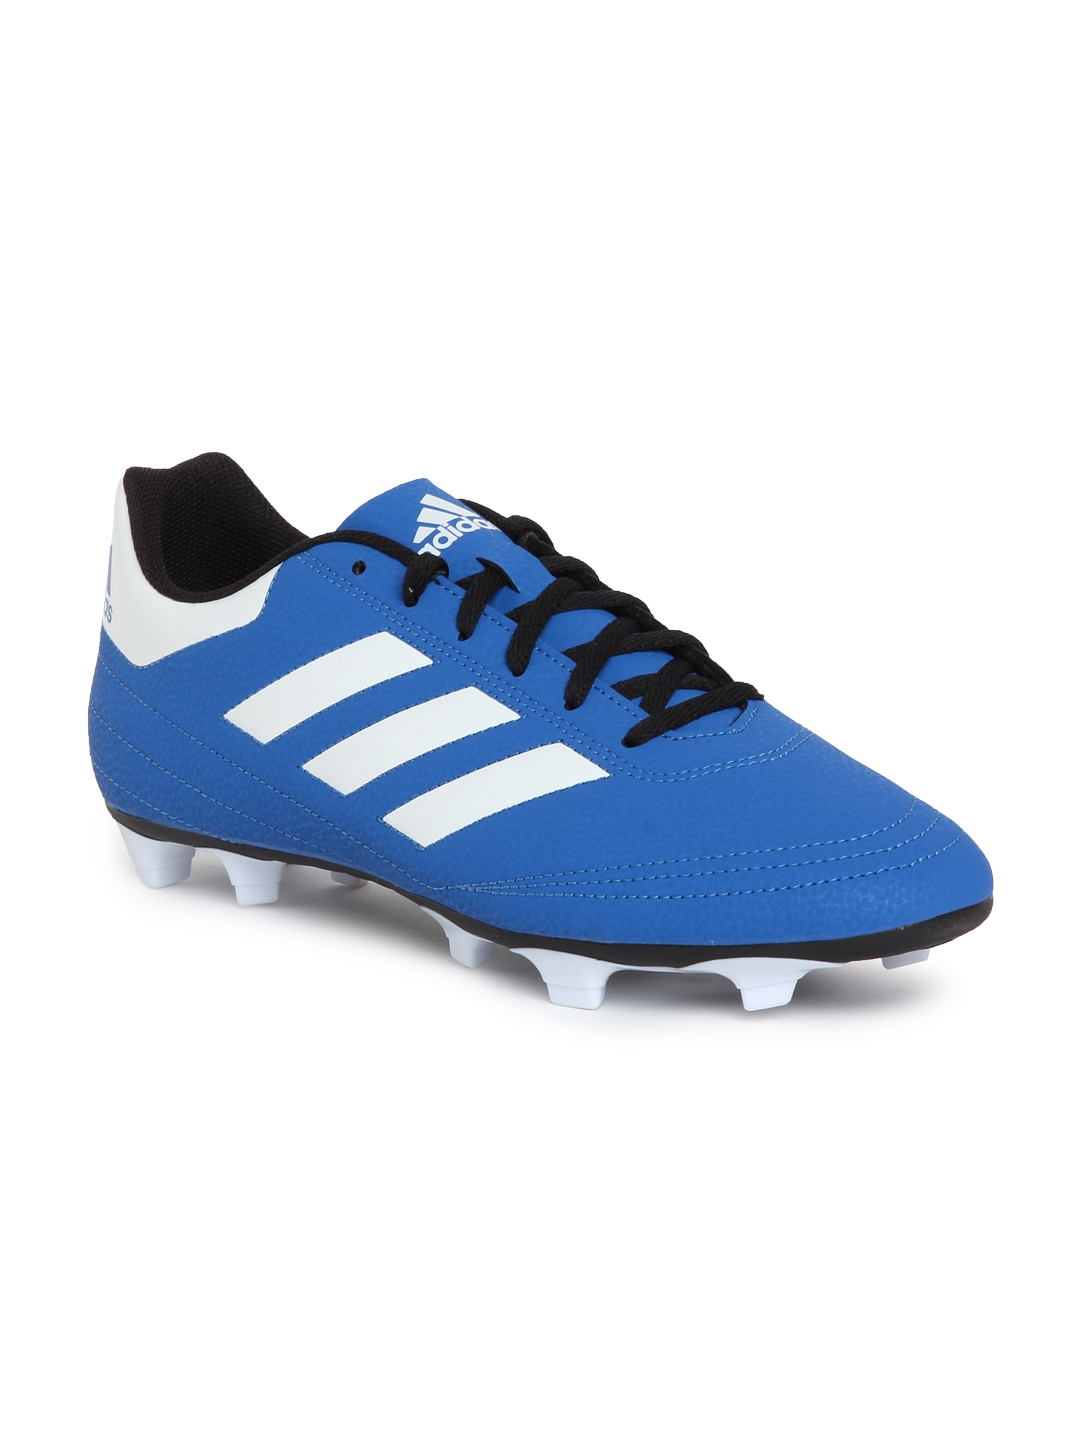 Buy Adidas Men Blue Goletto Vi Fg Football Shoes Sports Shoes